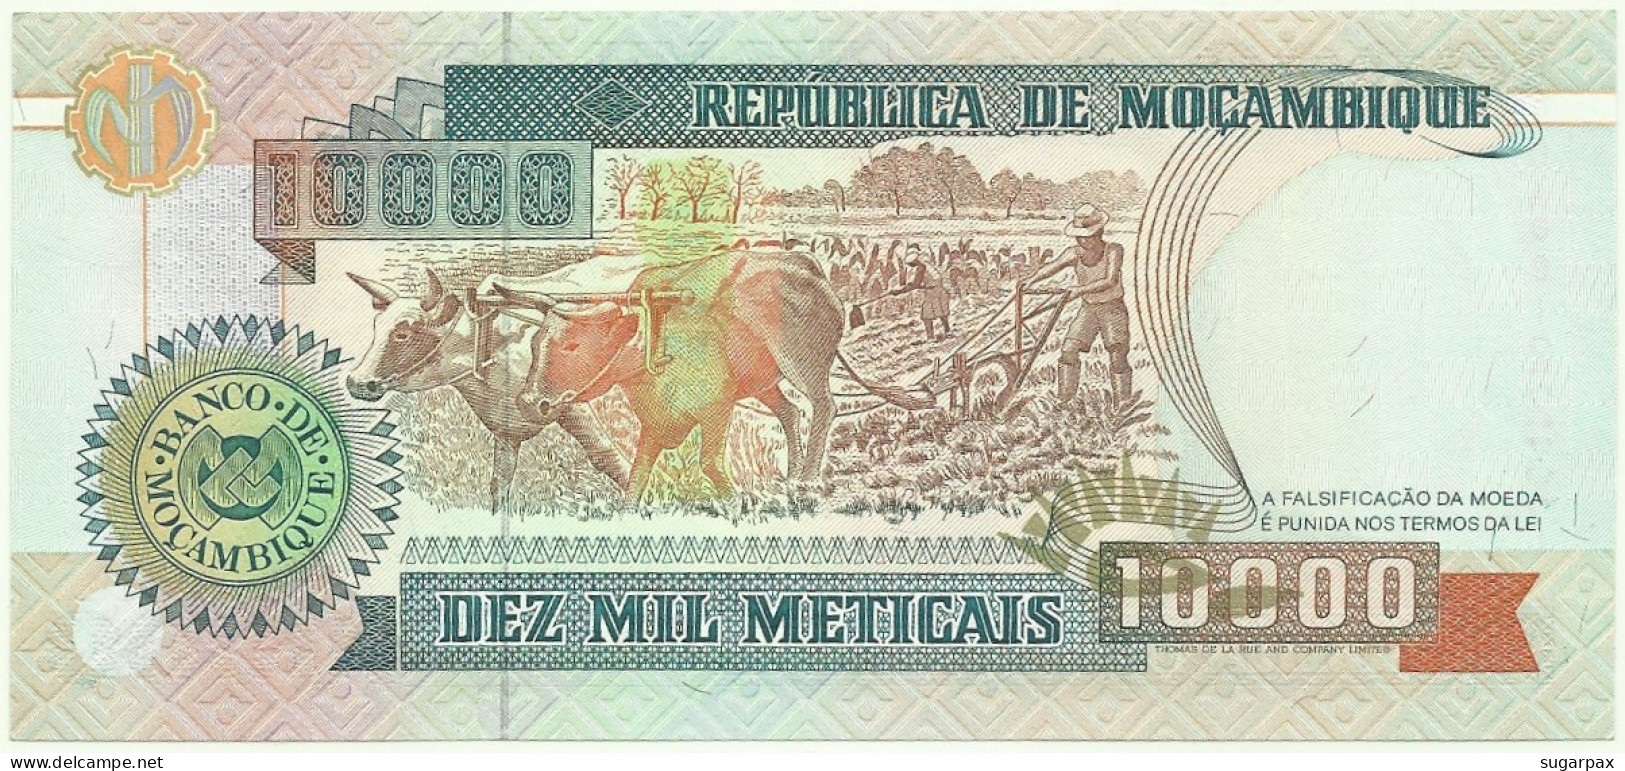 Mozambique - 10.000 Meticais - 16.06.1991 - P 137 - Unc. - Serie DA - Joaquim Chissano - 10000 - Mozambique